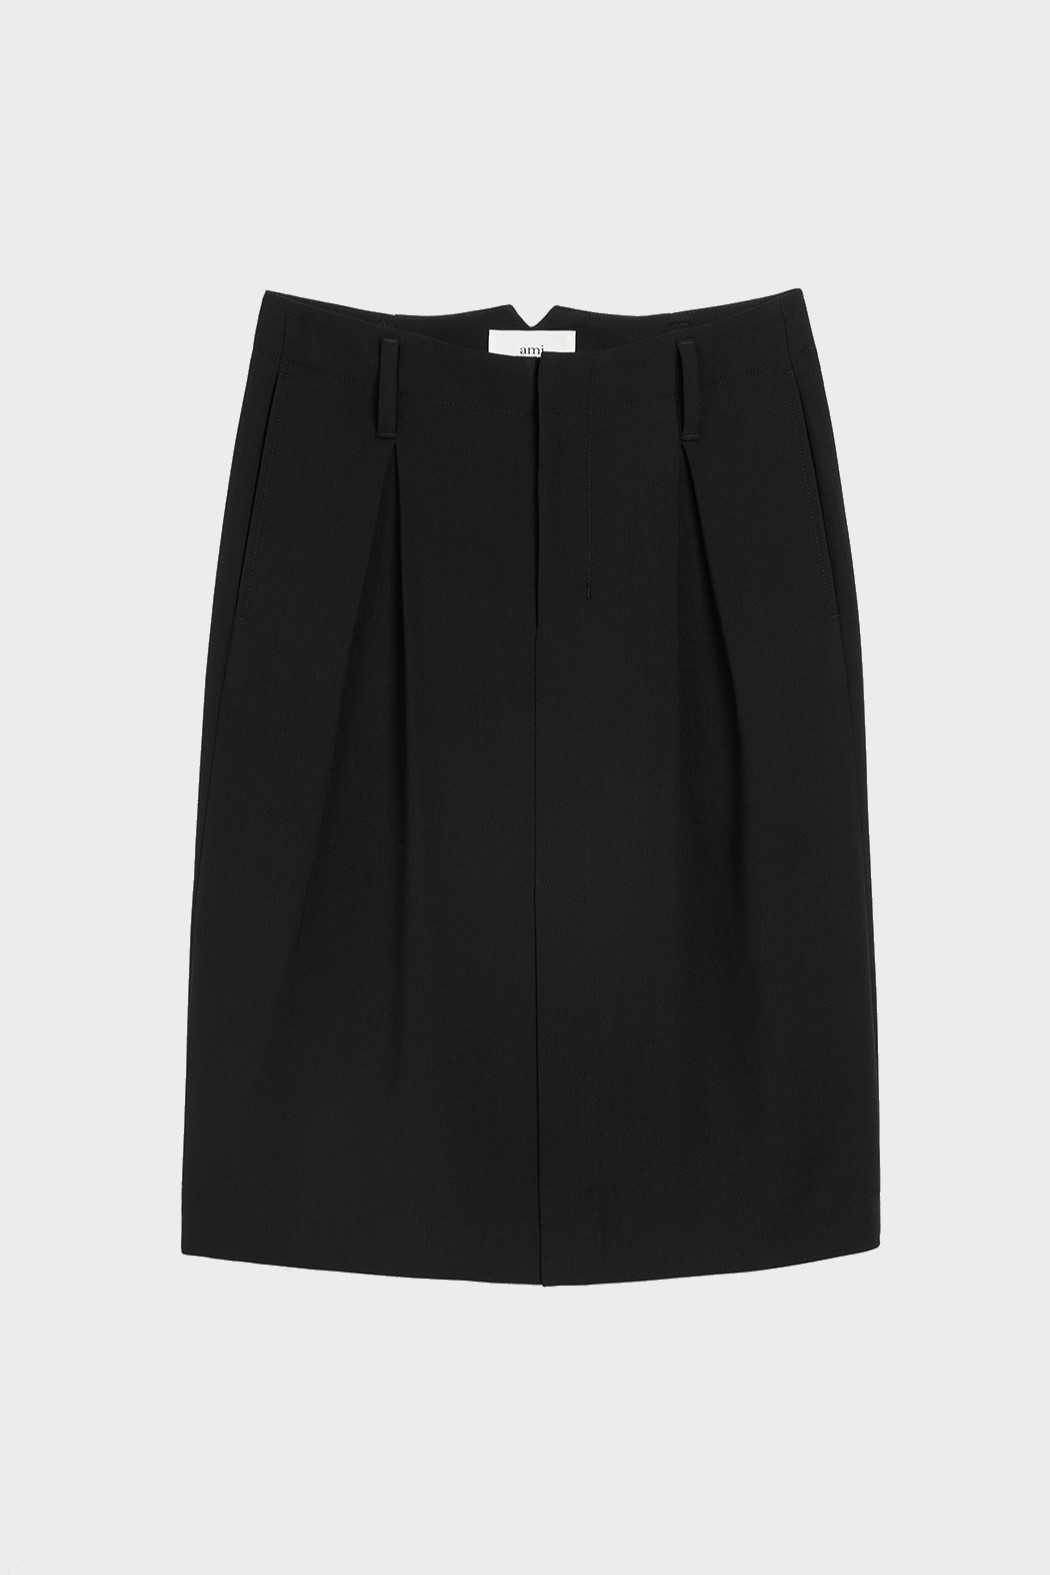 AMI PARIS Pencil Skirt in Black FR36 / DE34